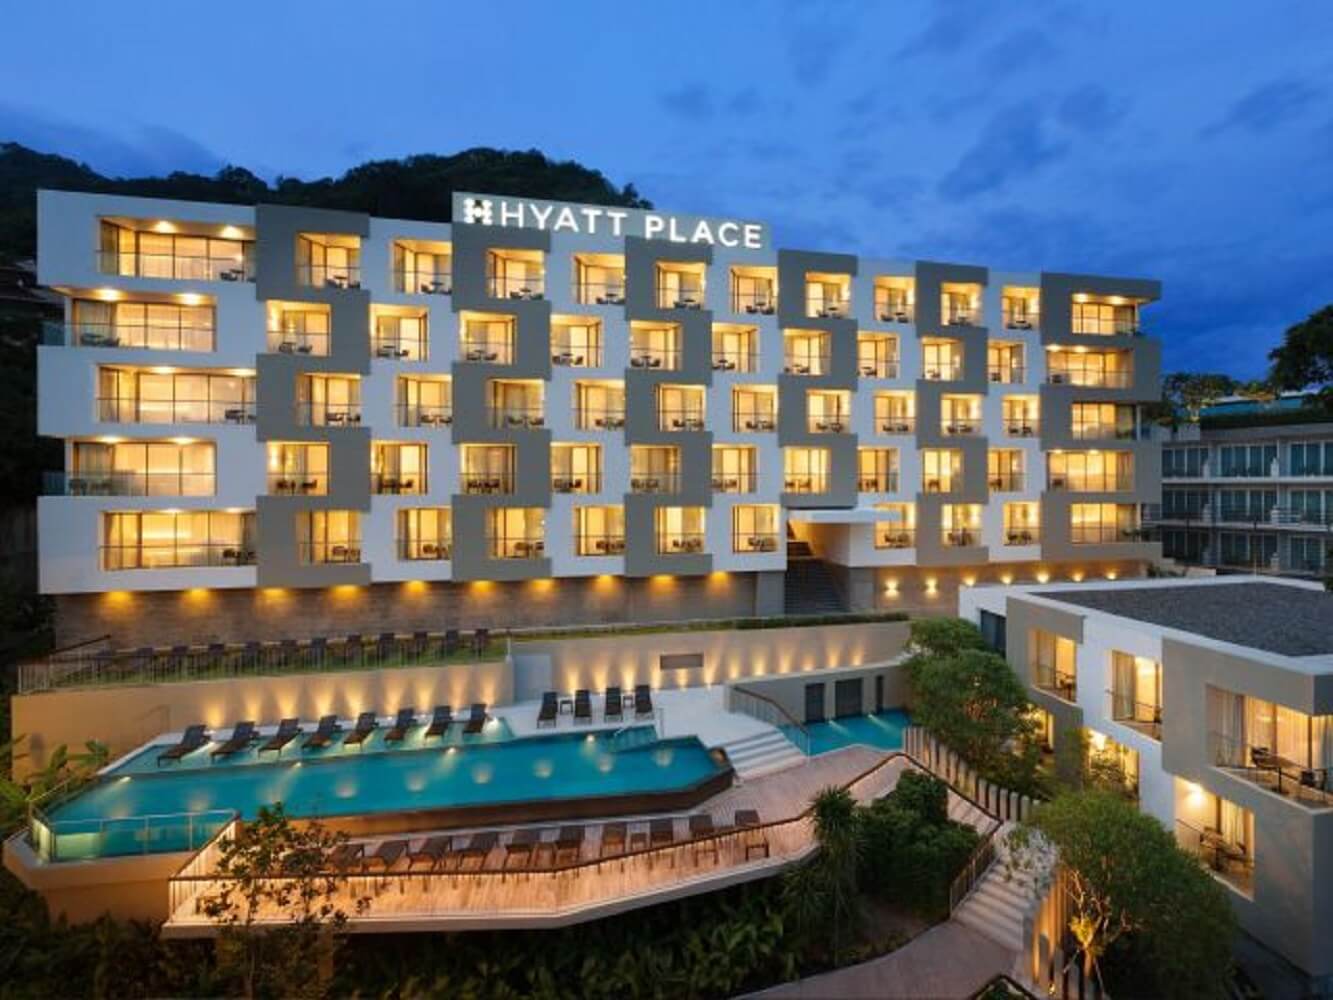 Combo Thái Lan 4 ngày 3 đêm: Hyatt Place Hotel 4 sao + Vé máy bay